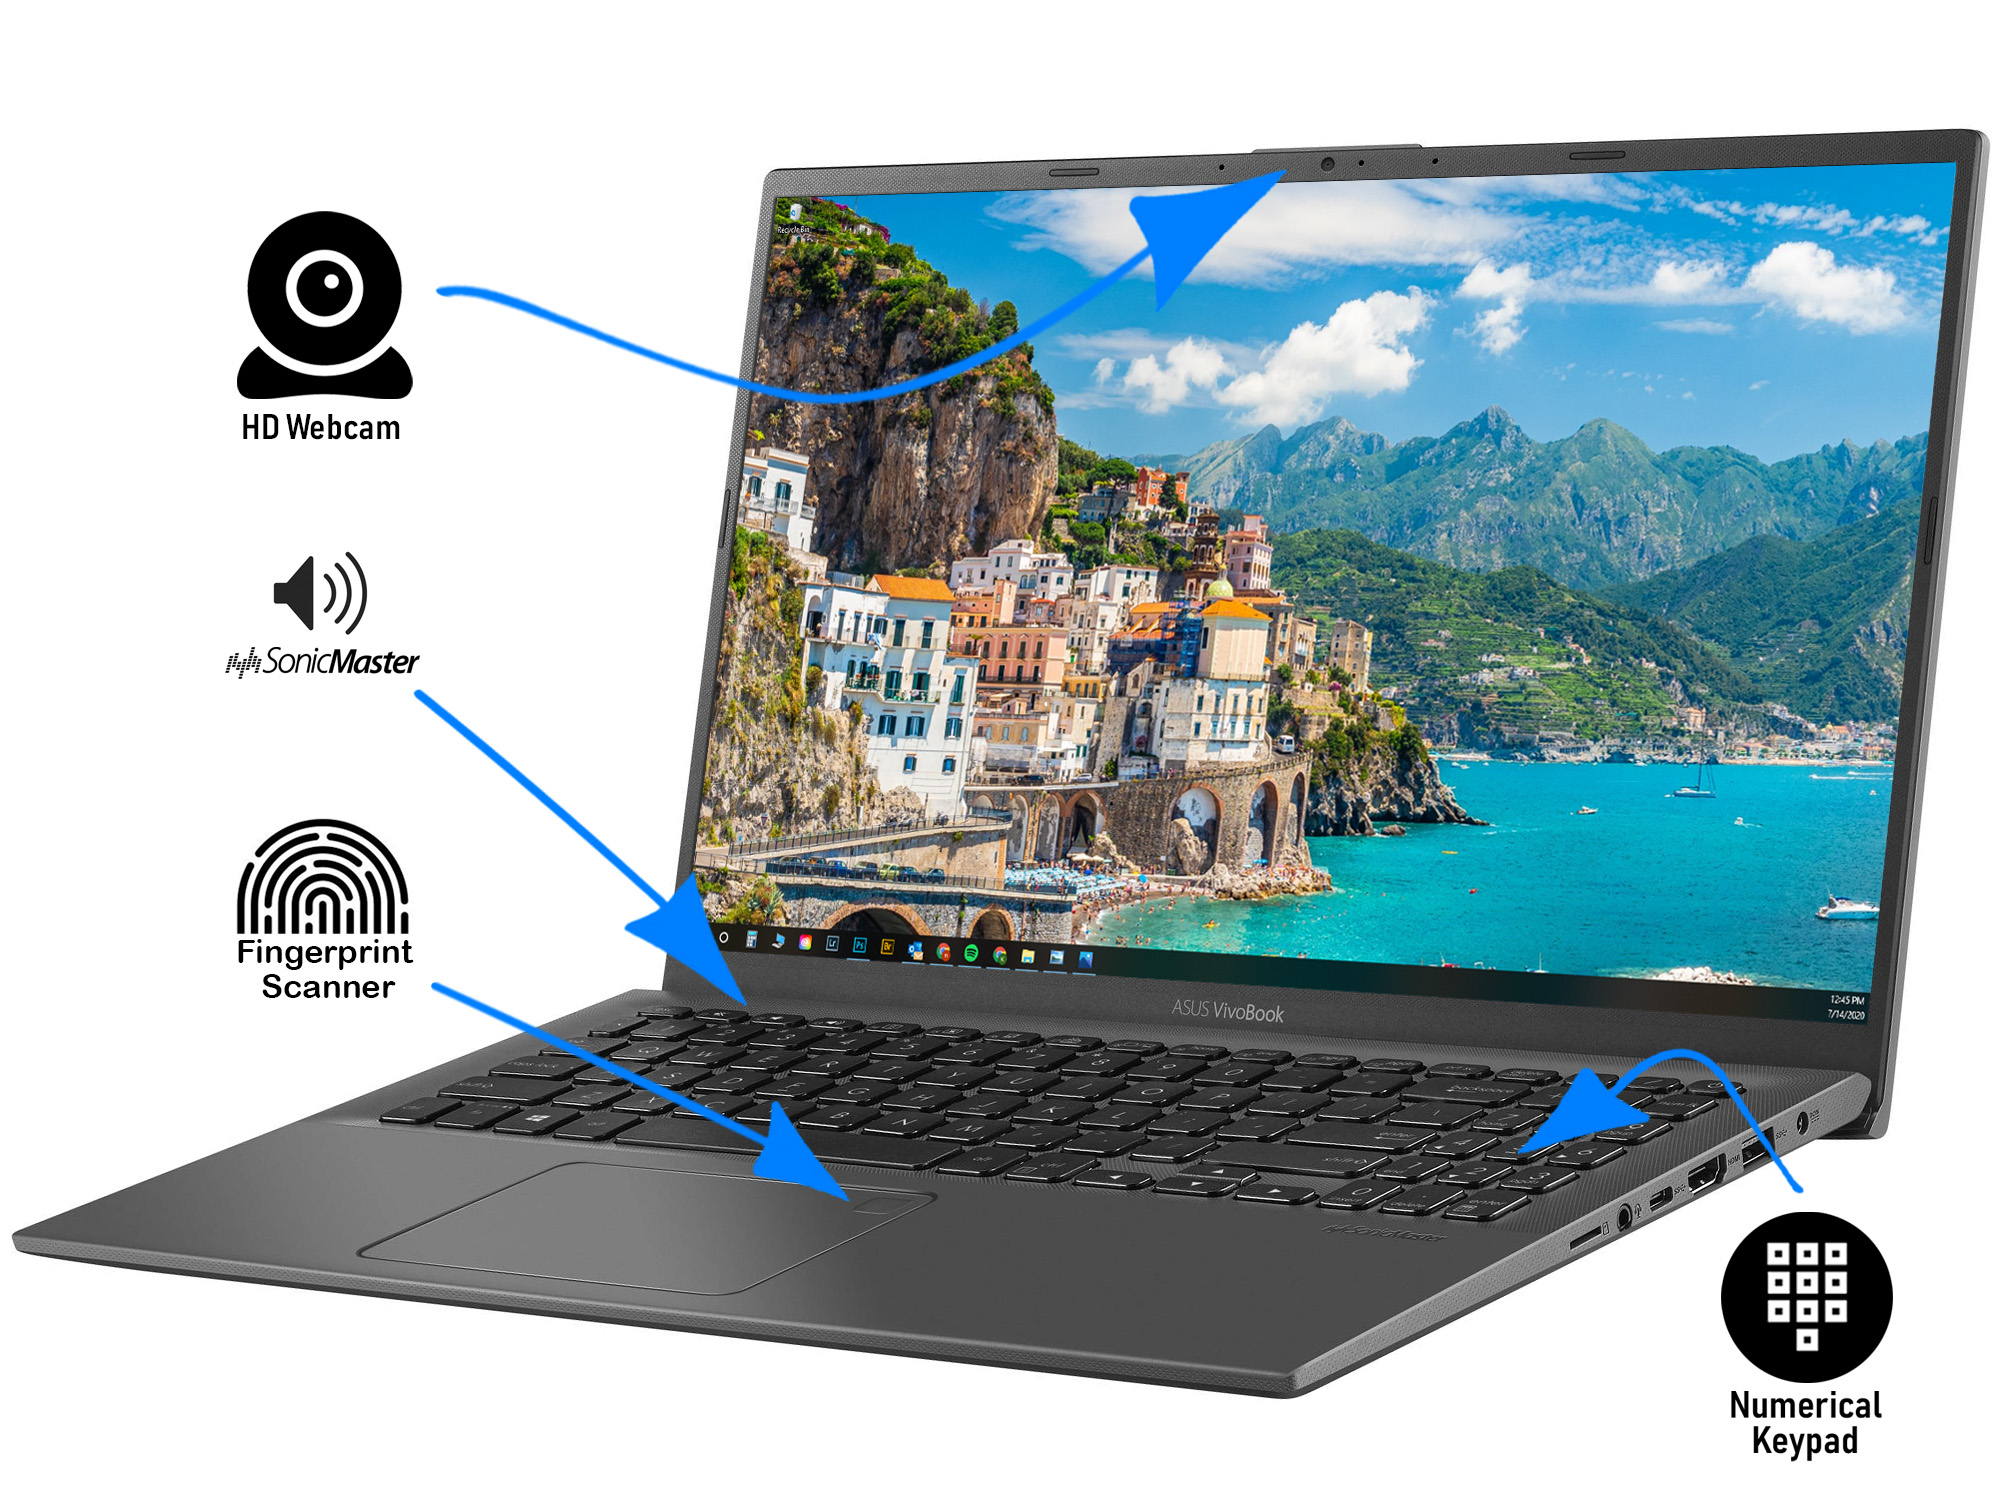 2021 Flagship ASUS VivoBook 15 Thin and Light Laptop I 15.6" FHD Touchscreen Display I 10th Gen Intel Core i3-1005G1 I 4GB RAM 128GB SSD Fingerprint Wifi5 Win 10 - image 3 of 7